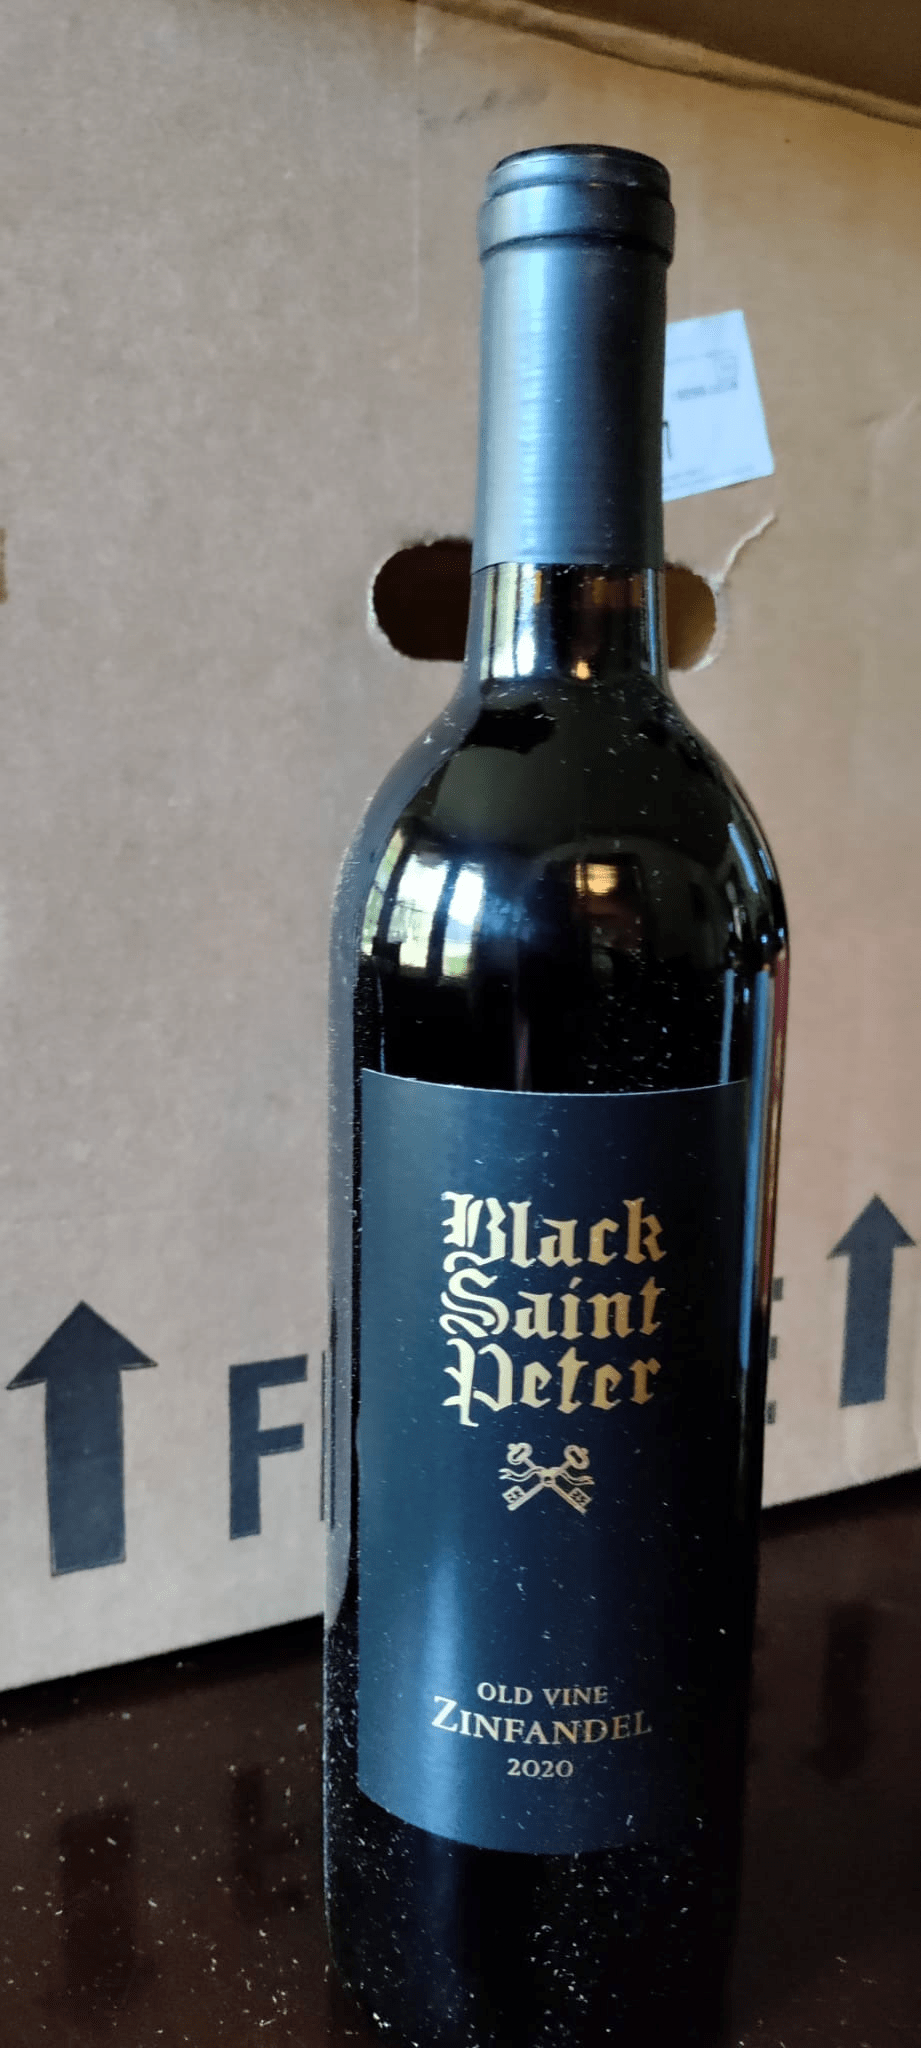 Bottle of Black Saint Peter, Zinfandel.